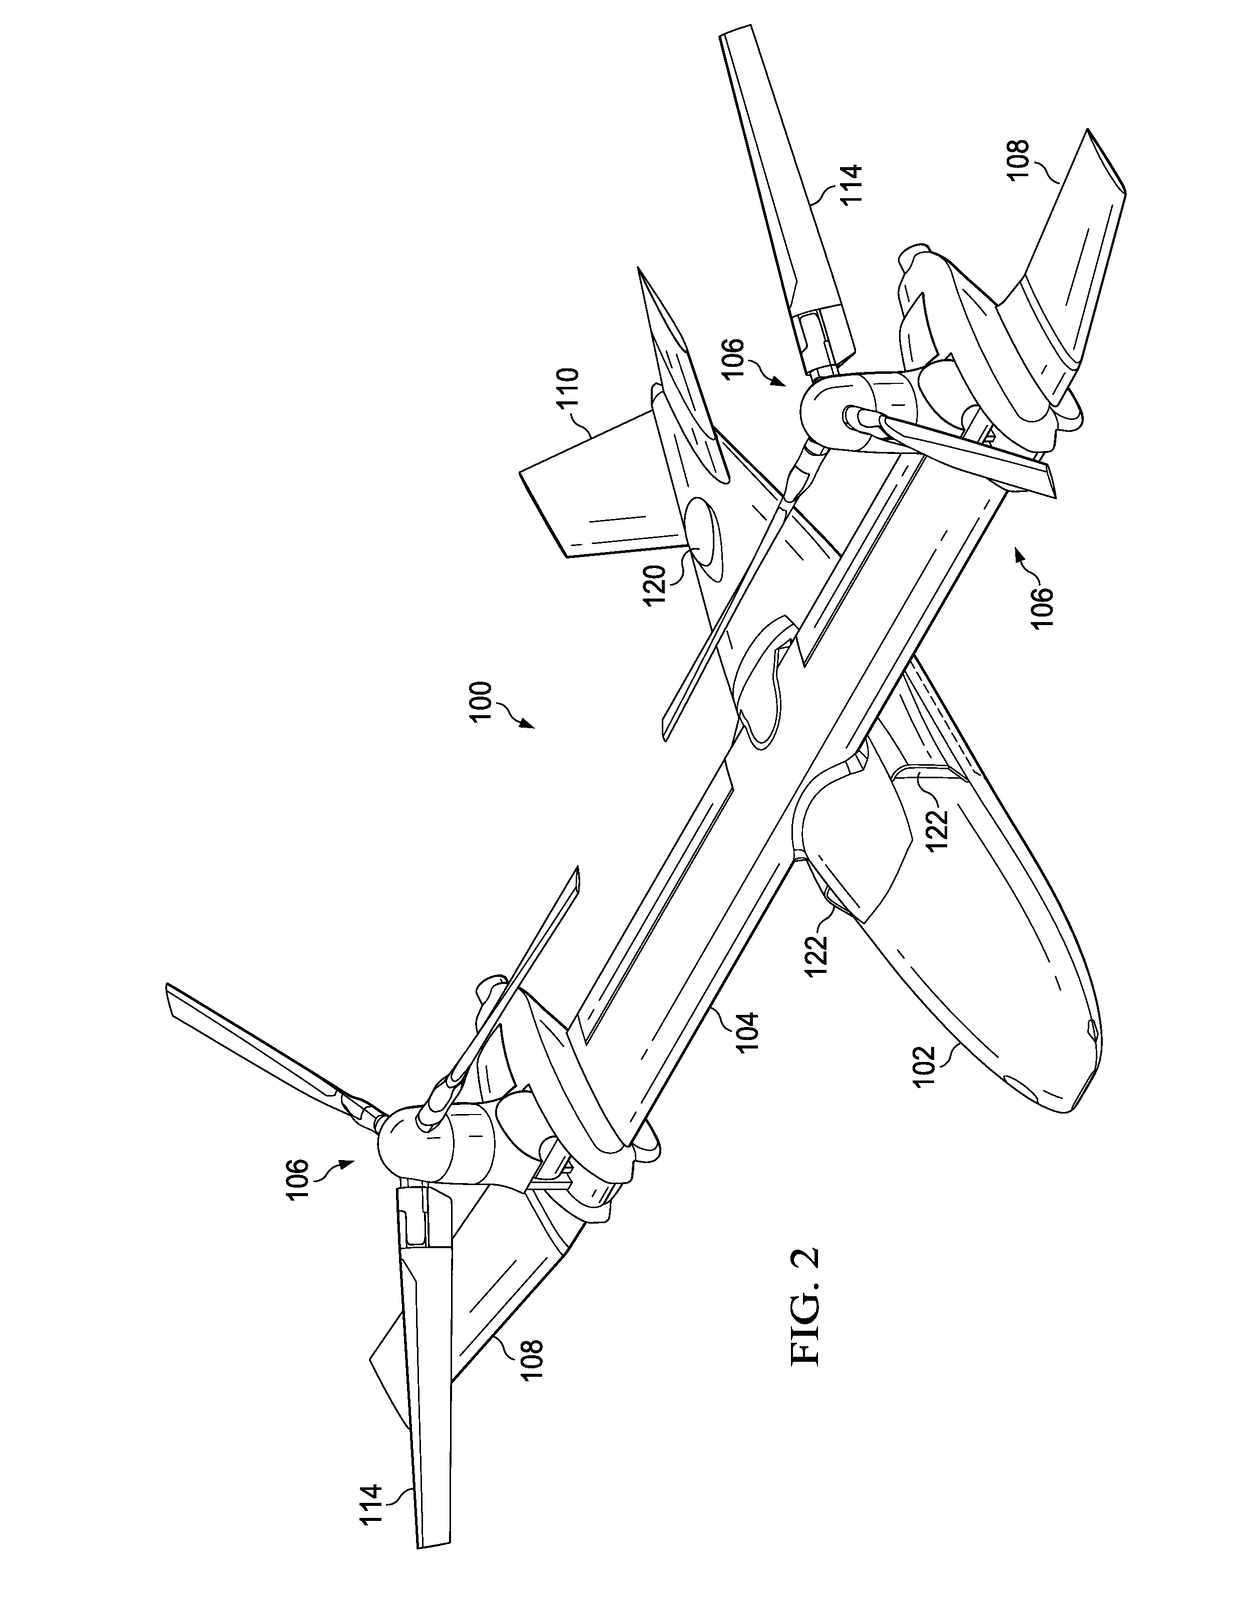 Rotating proprotor arrangement for a tiltrotor aircraft